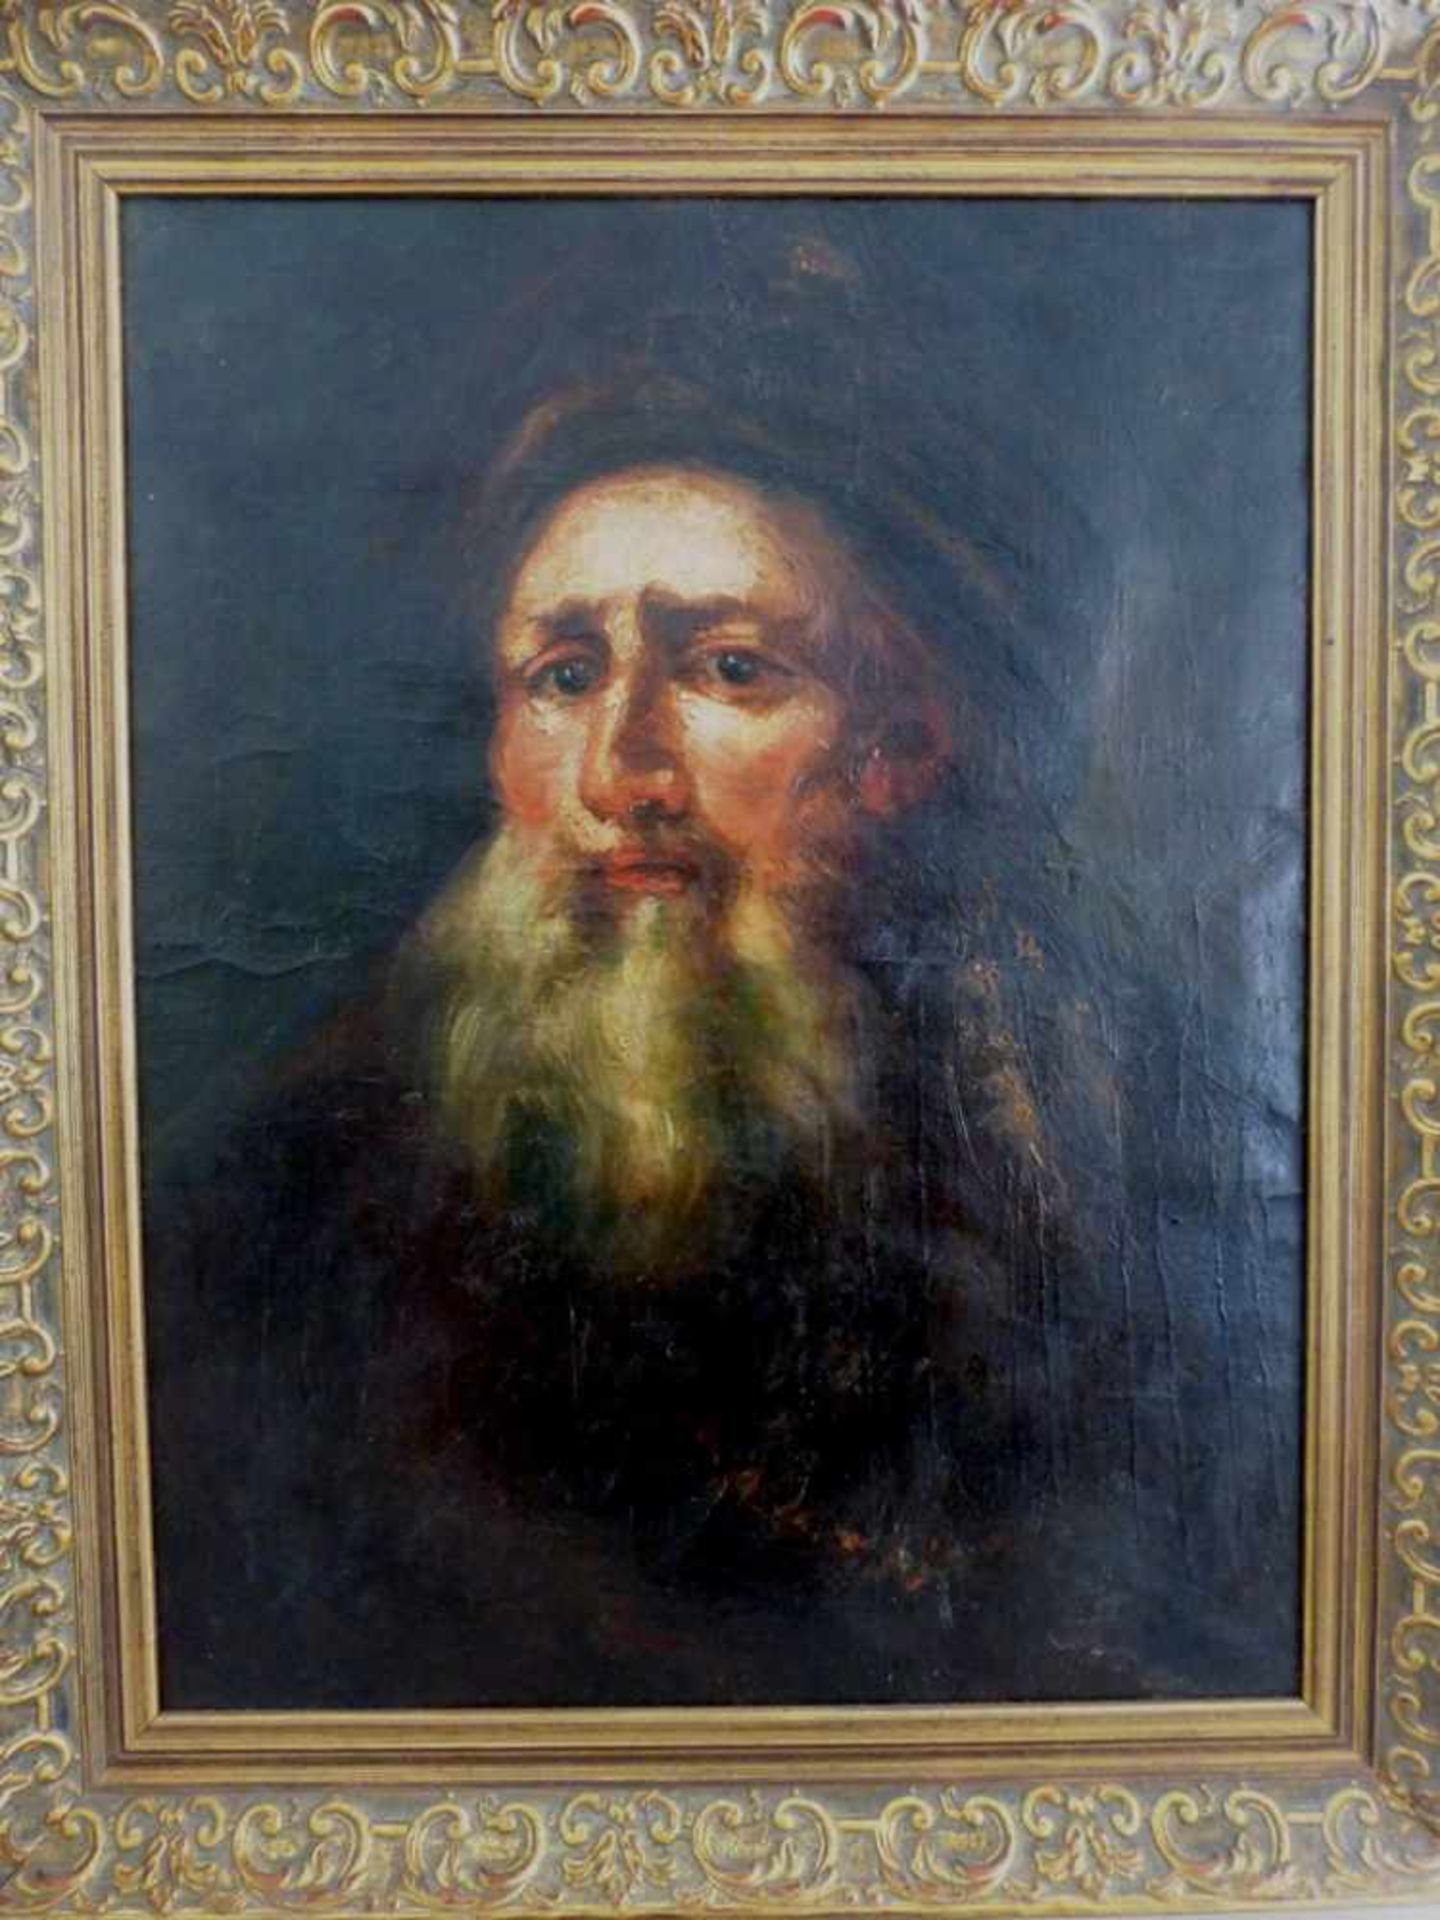 Gemälde 19.Jh., Öl/Lw. a. Holz aufgezogen, Portrait eines bärtigen Mannes, i.R. 65cm x 52cm